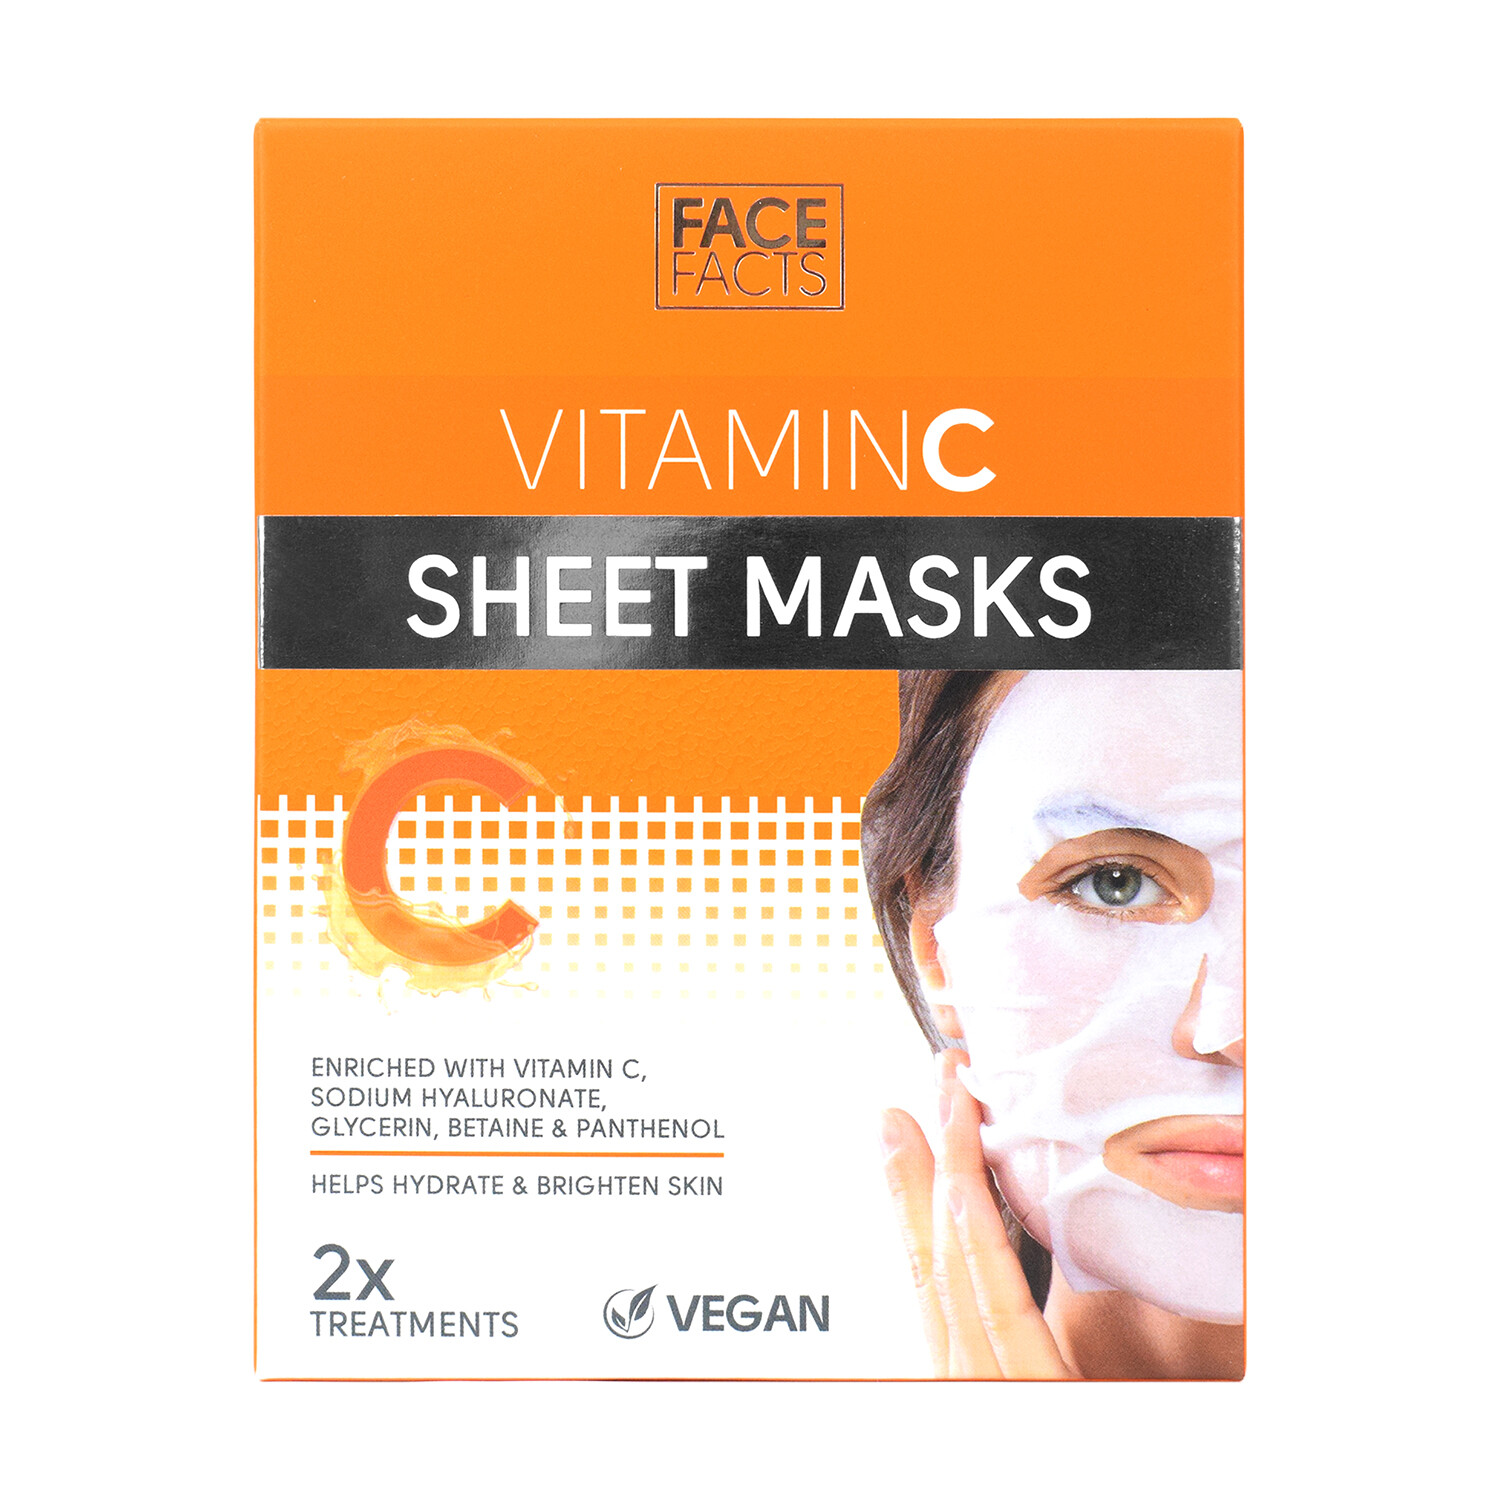 Face Facts Vitamin C Sheet Mask Image